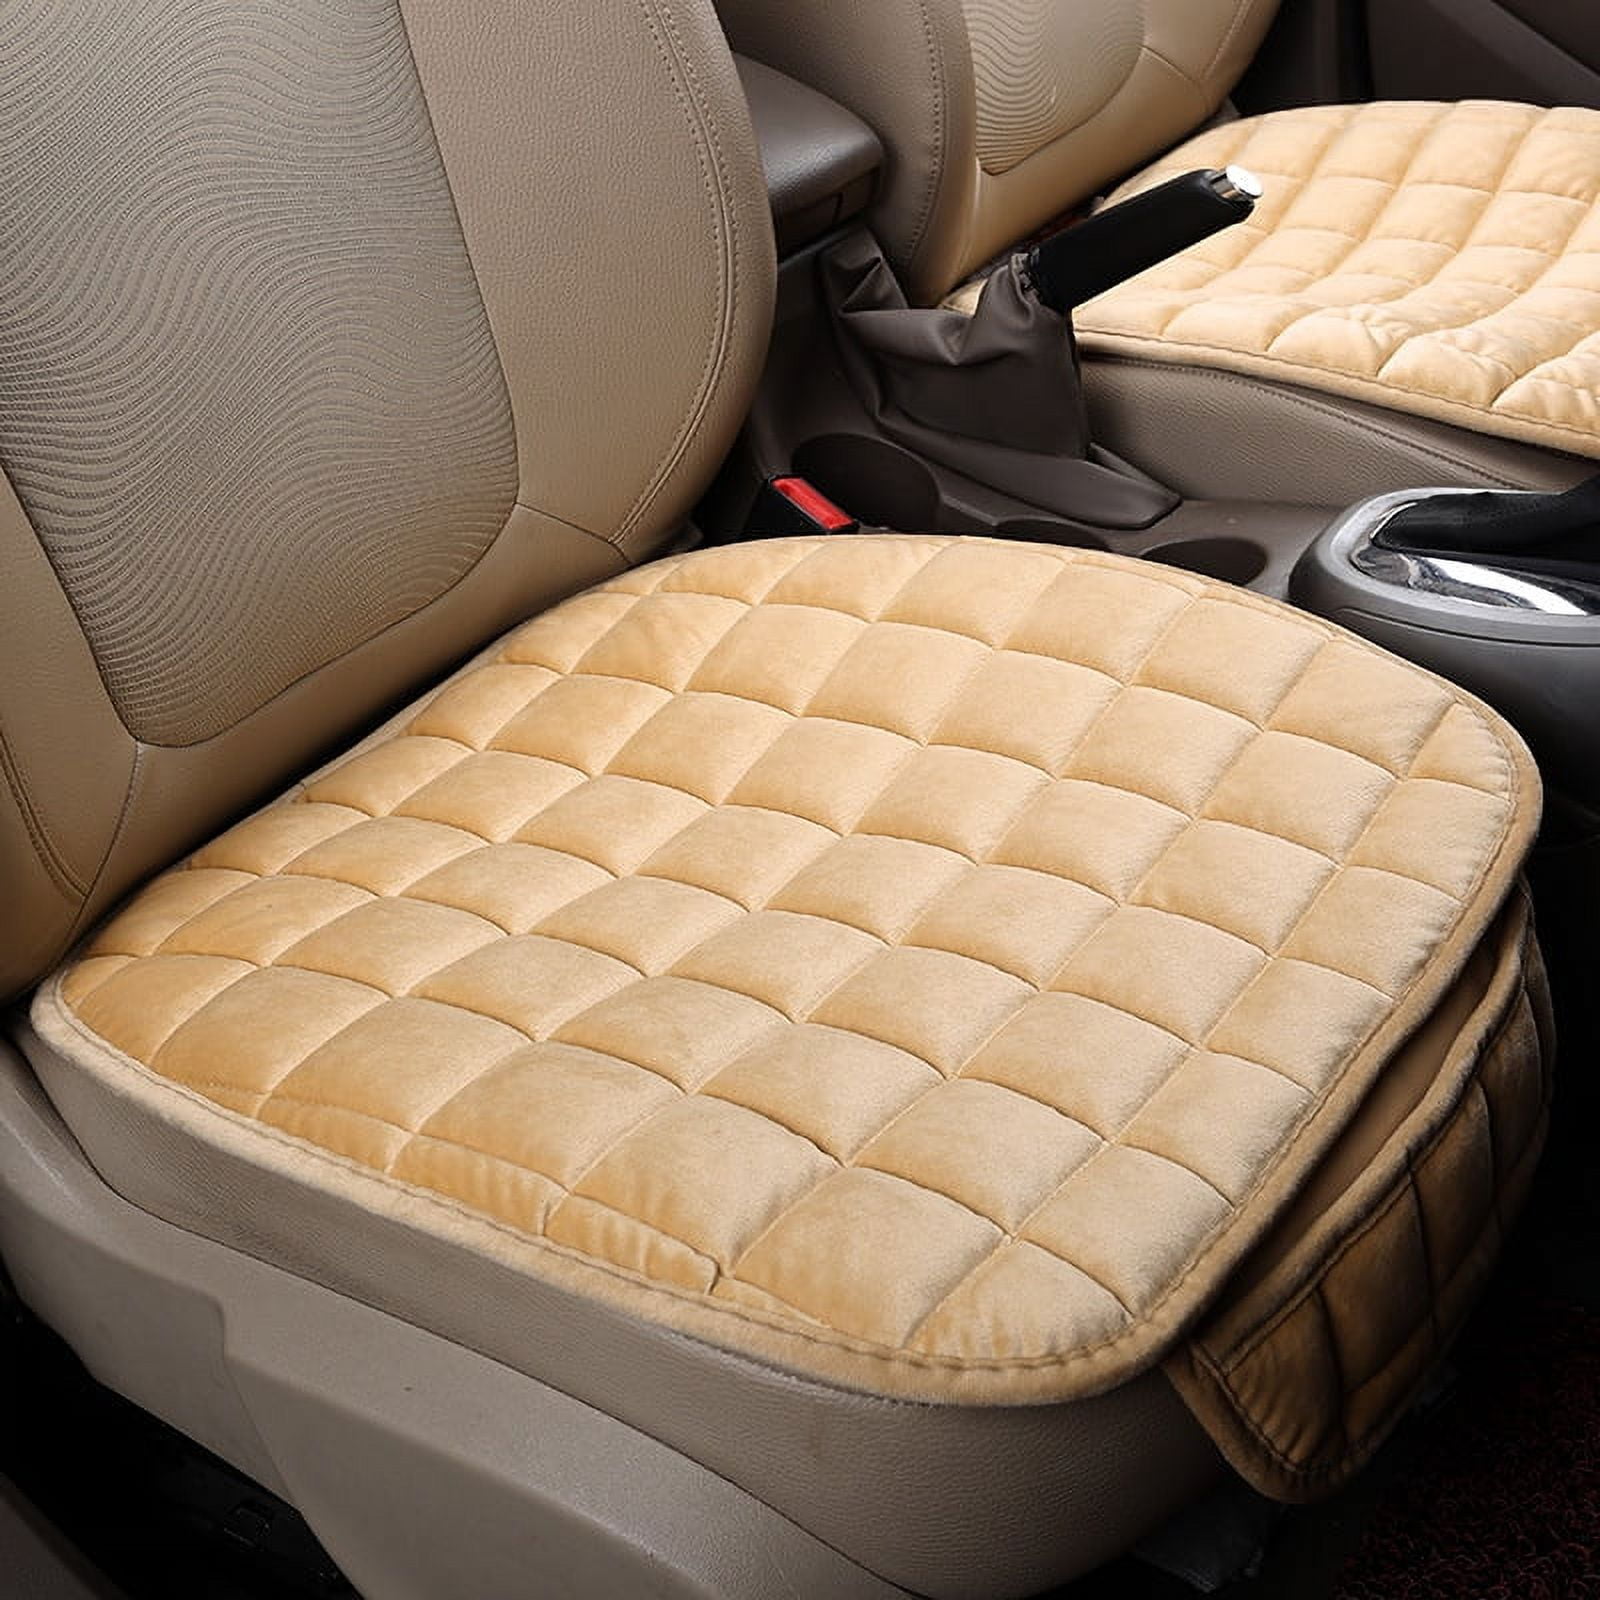 Car Seat Cushion with Comfort Memory Foam & Non-Slip Rubber Bottom